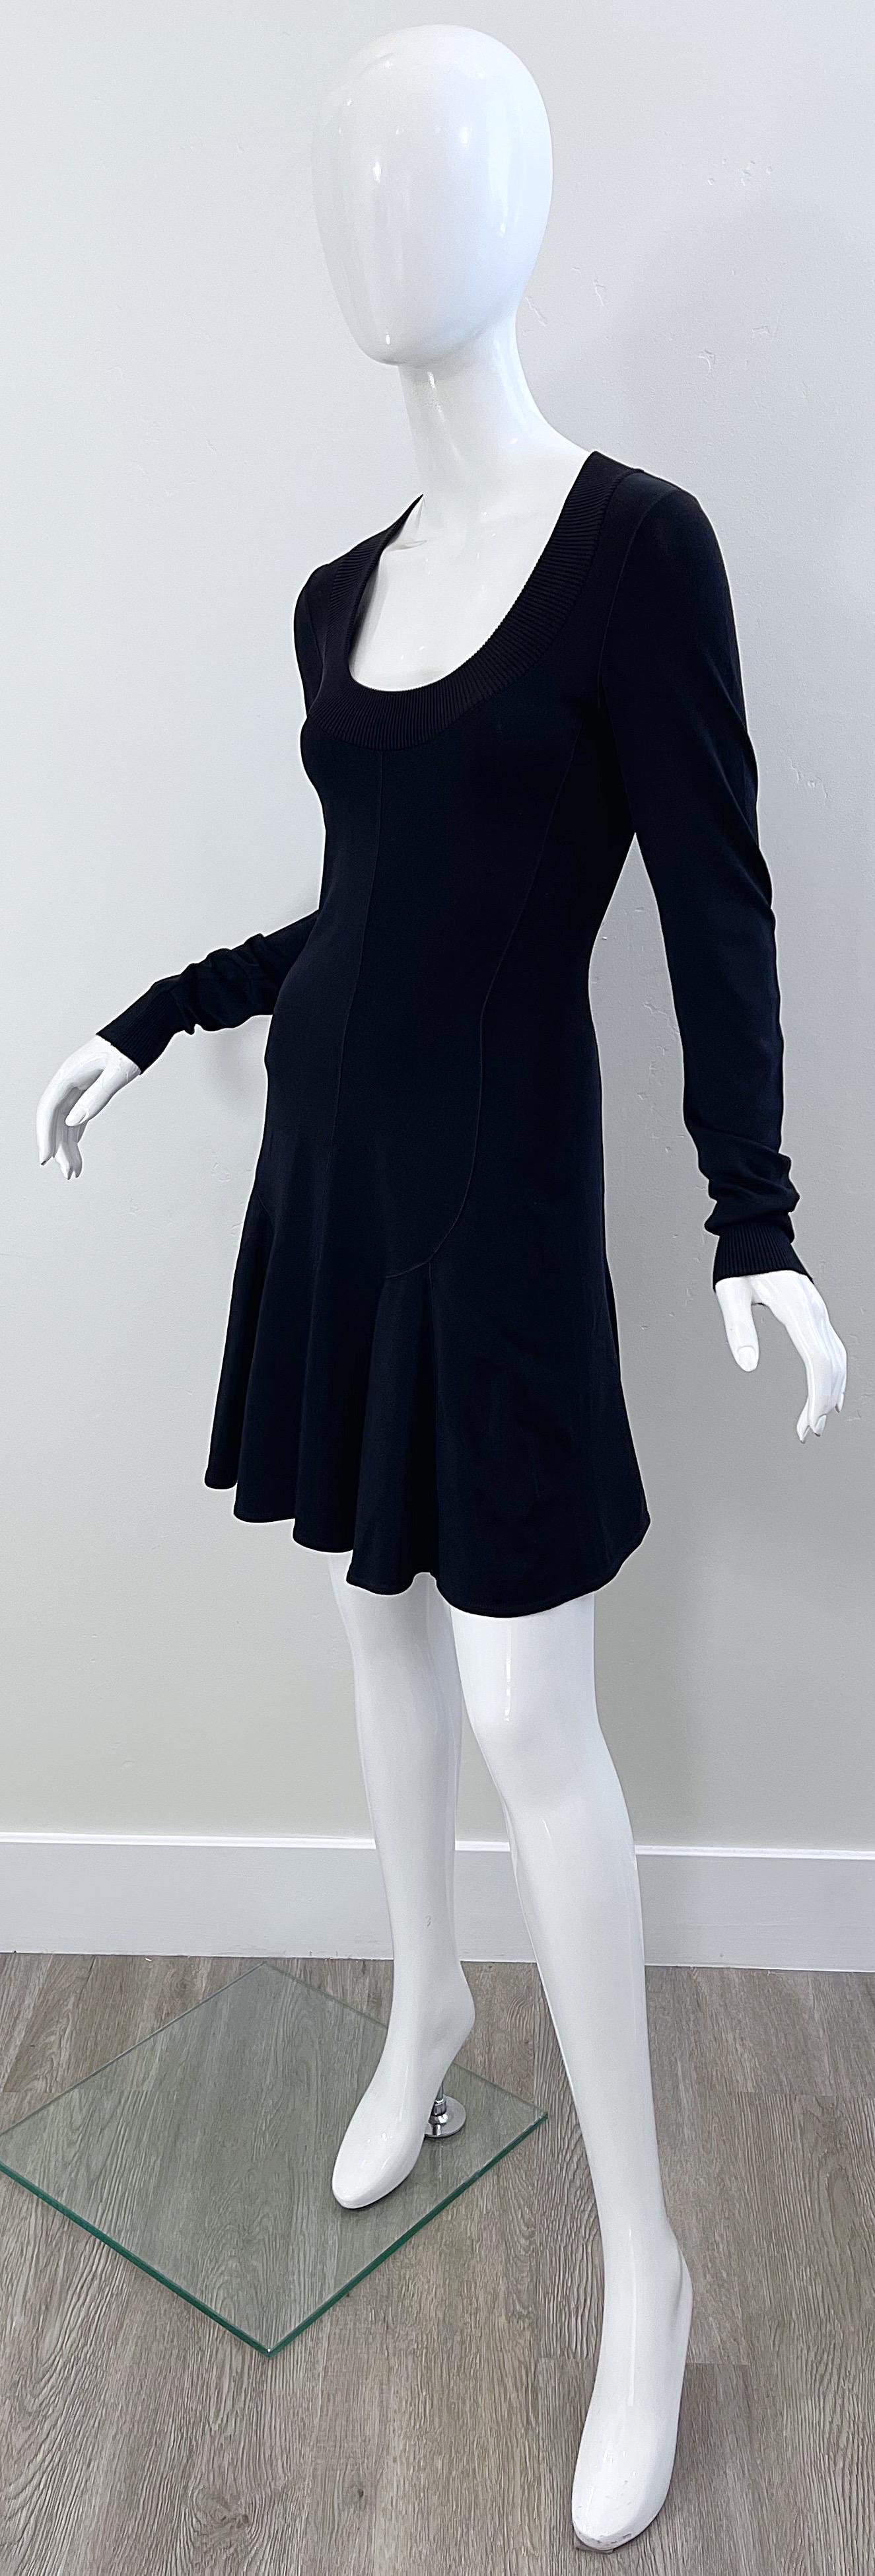 Azzedine Alaia 1990s Black Bodcon Long Sleeve Sz Medium Vintage 90s Skater Dress For Sale 6